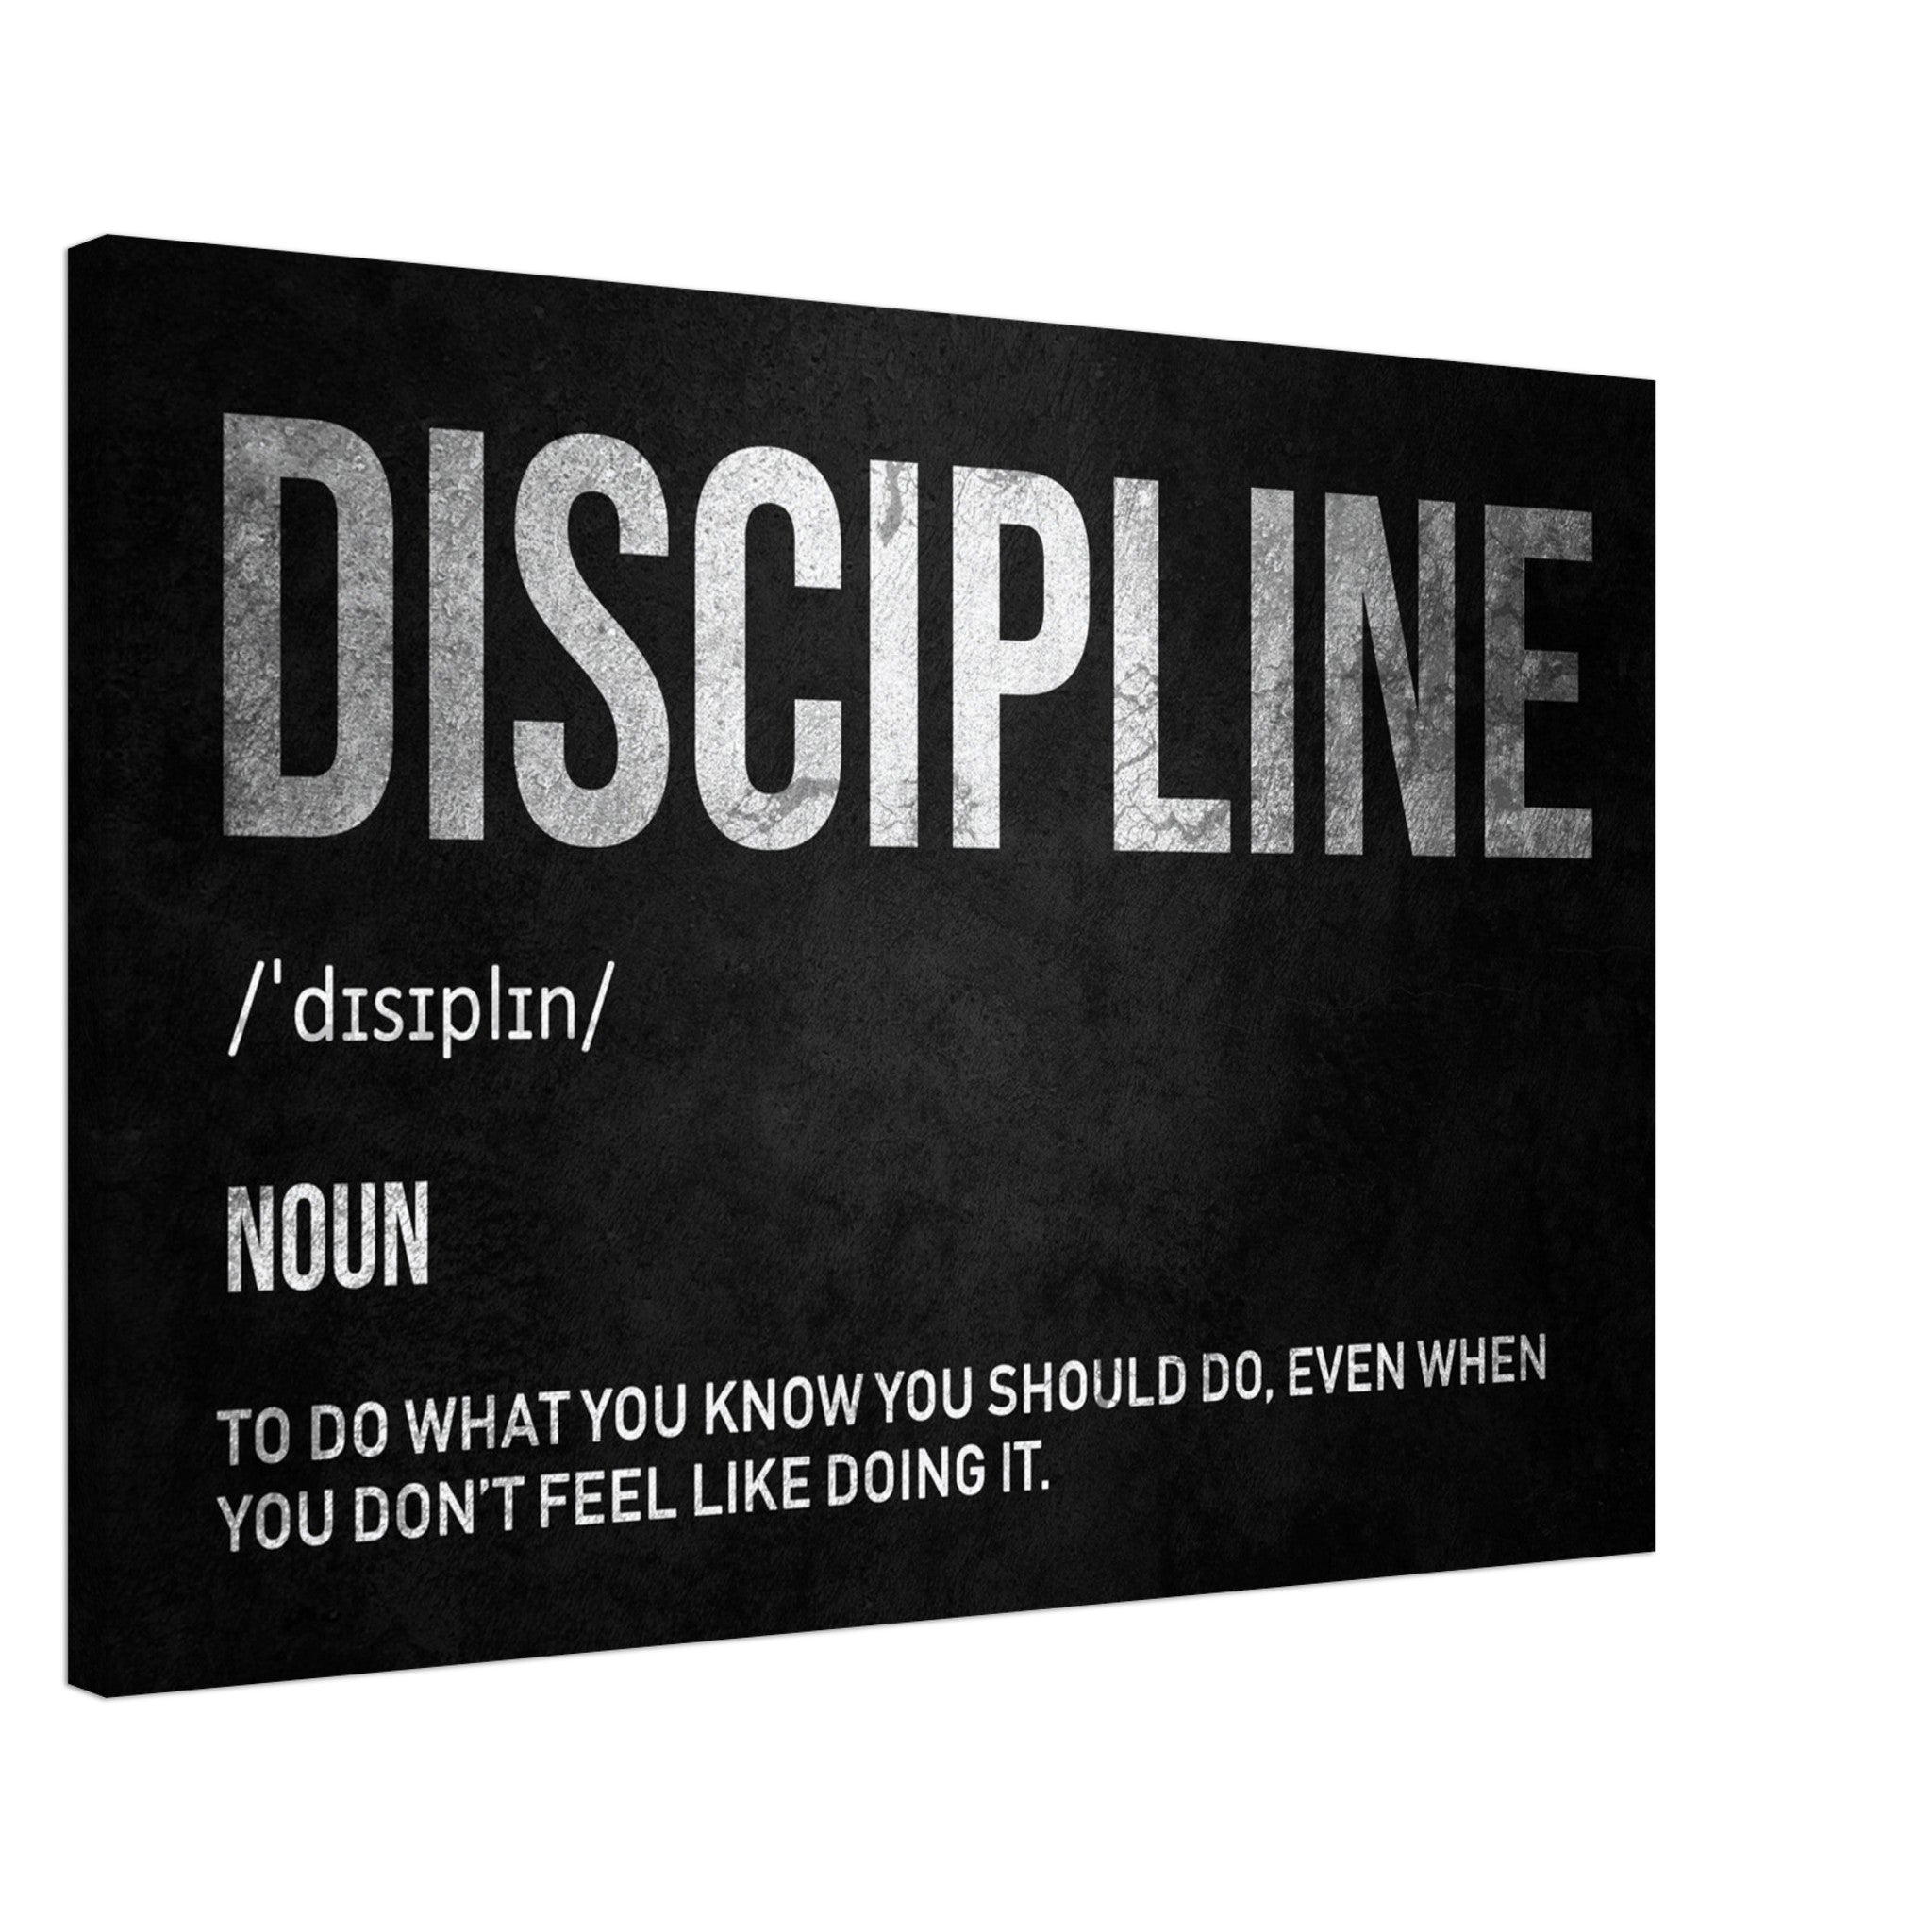 DISCIPLINE (Definition)